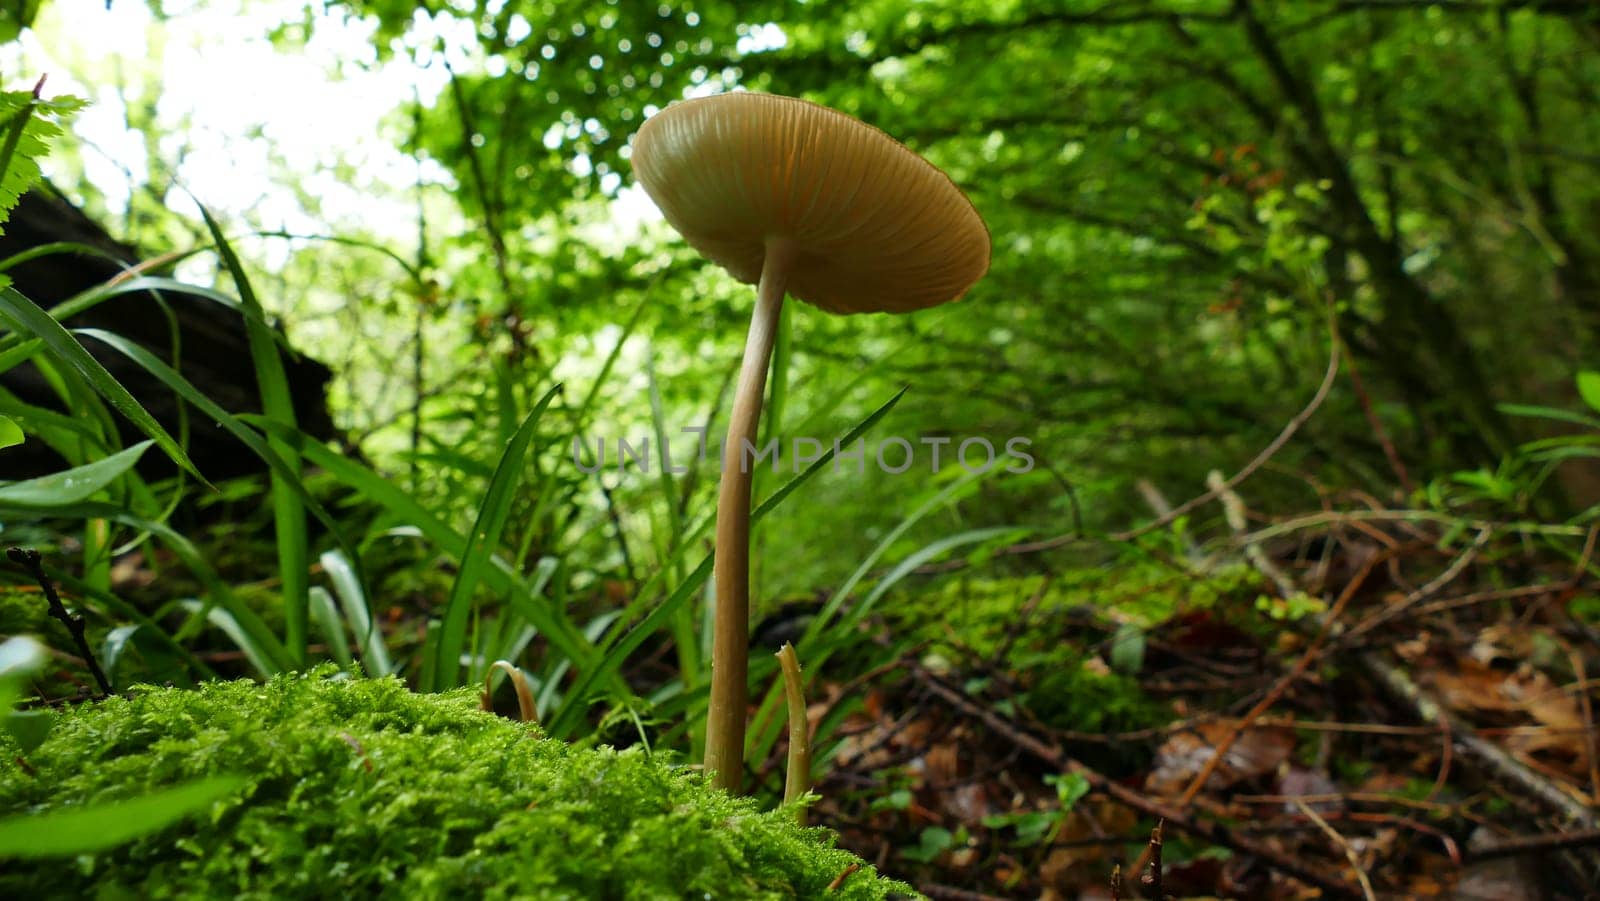 Mushrooms among the forest vegetation